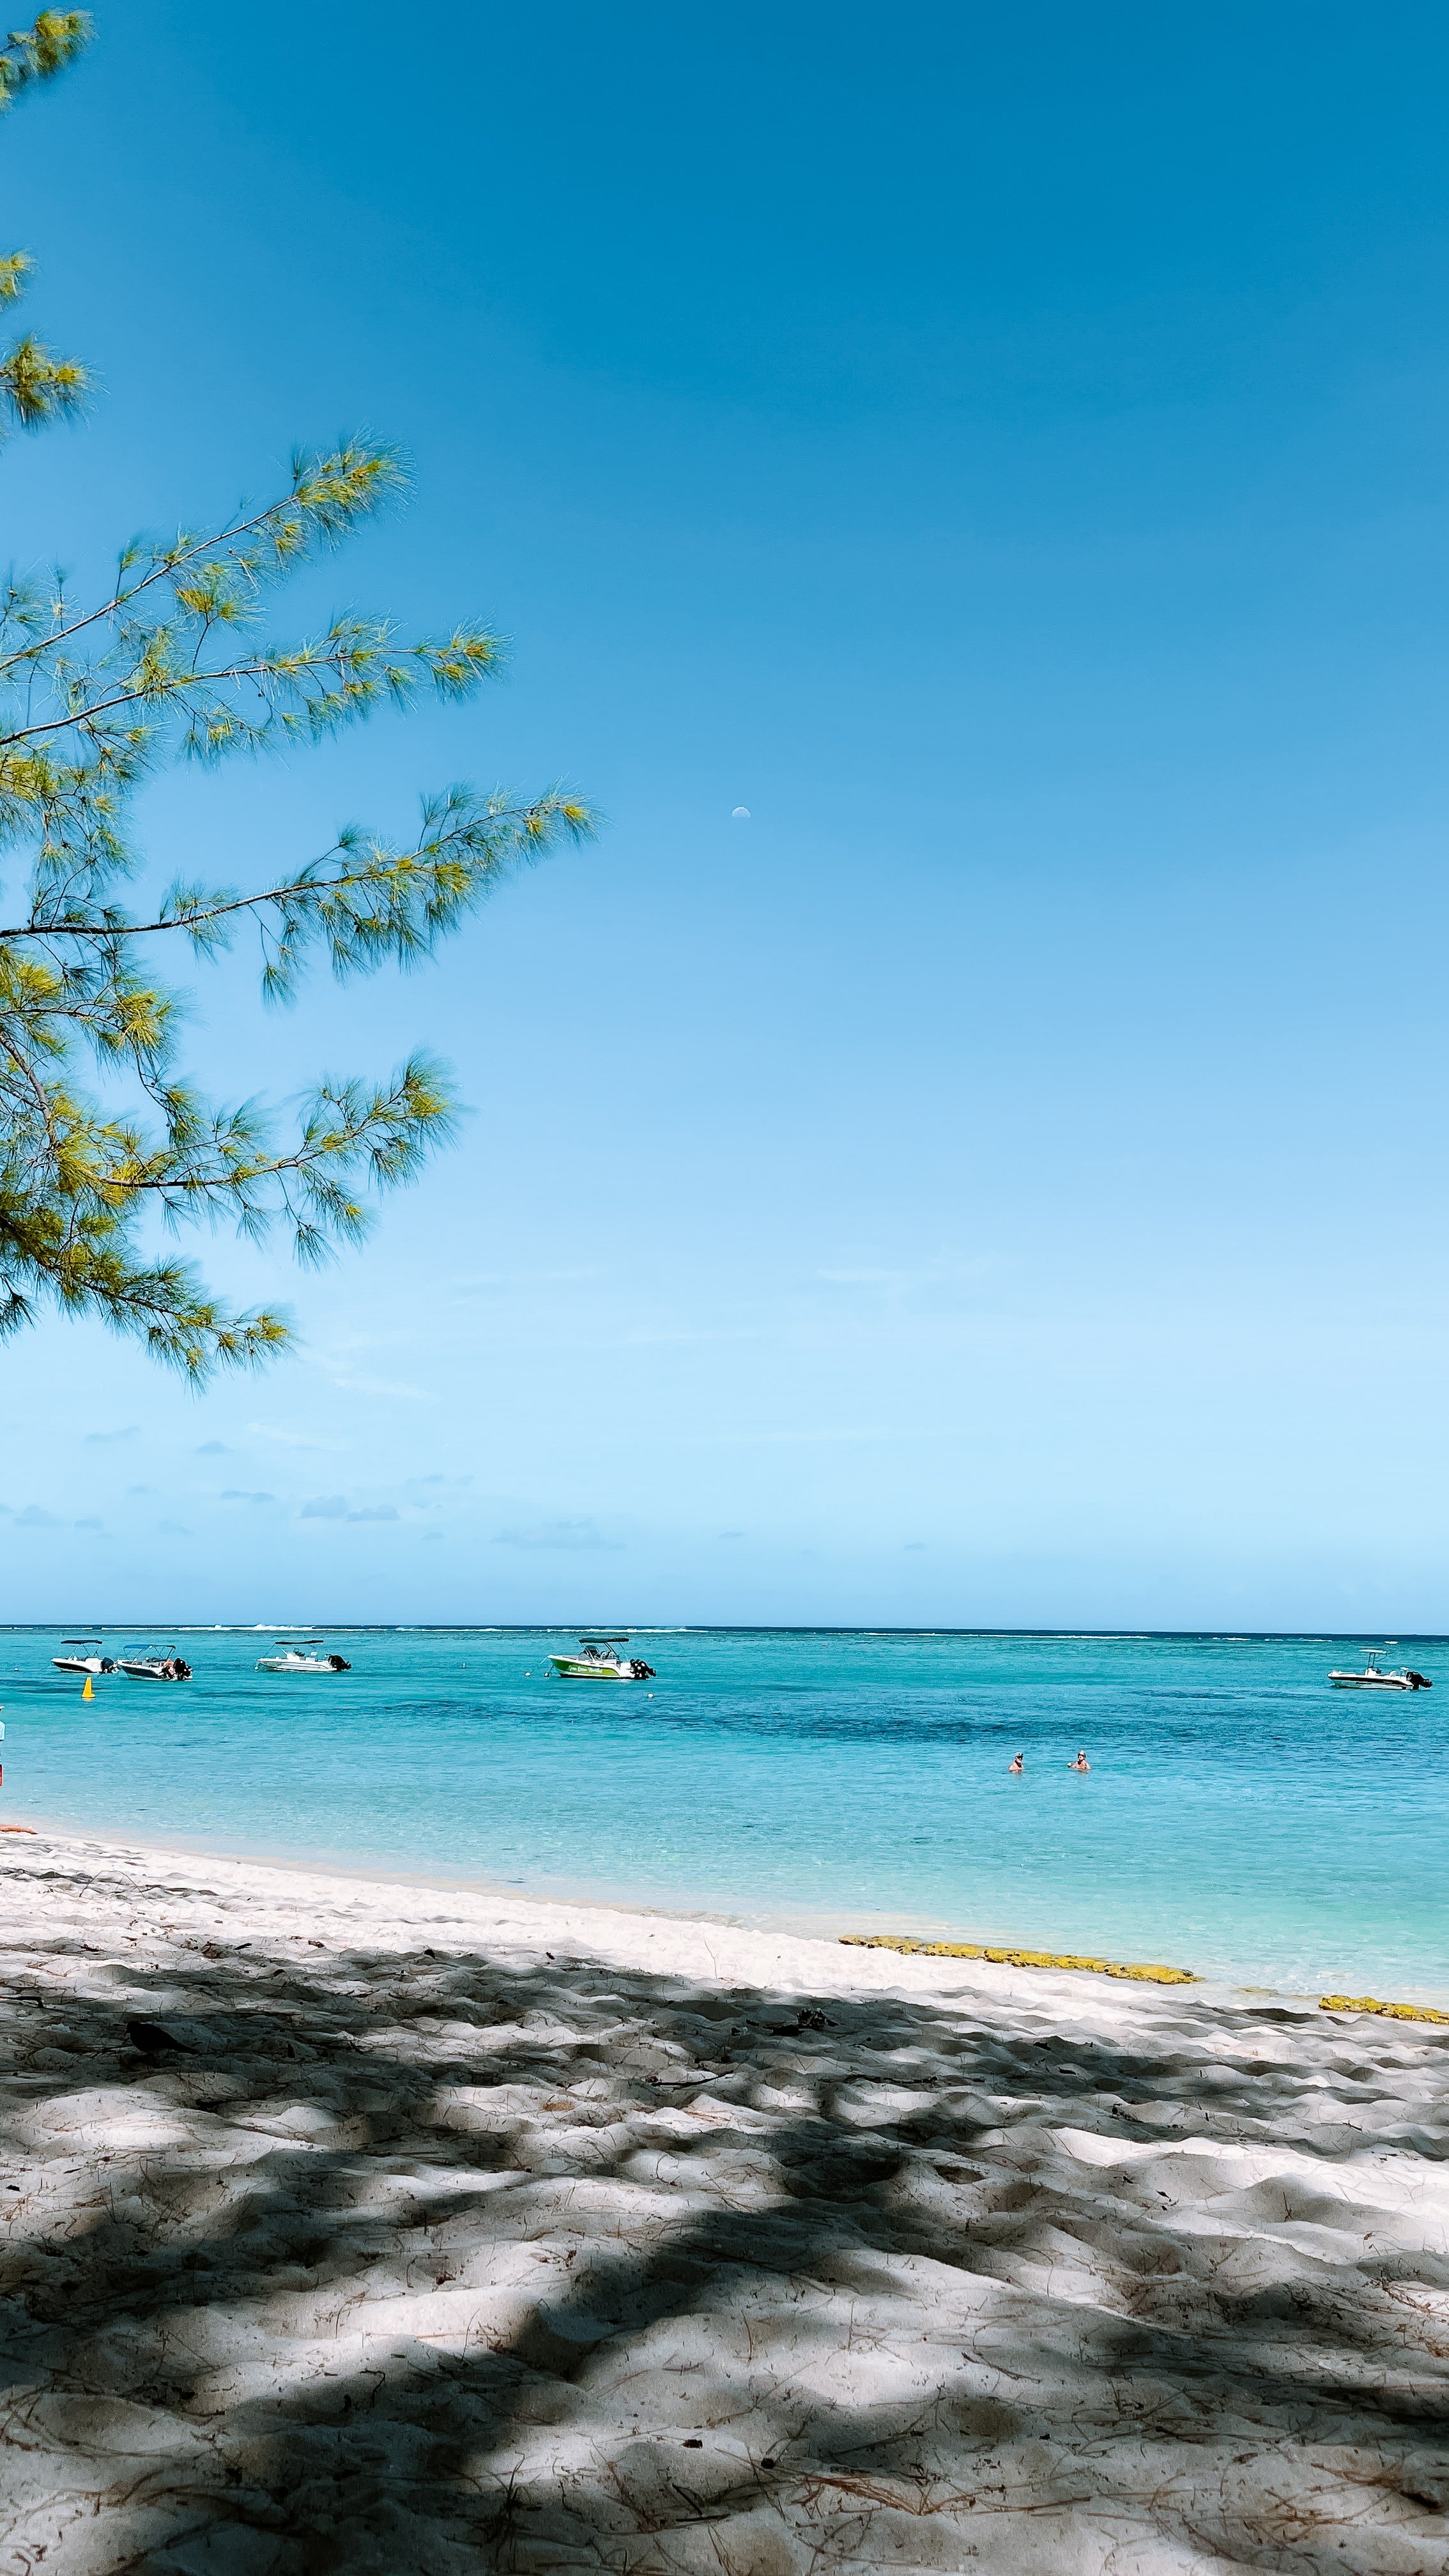 beach vacation in mauritius.jpg